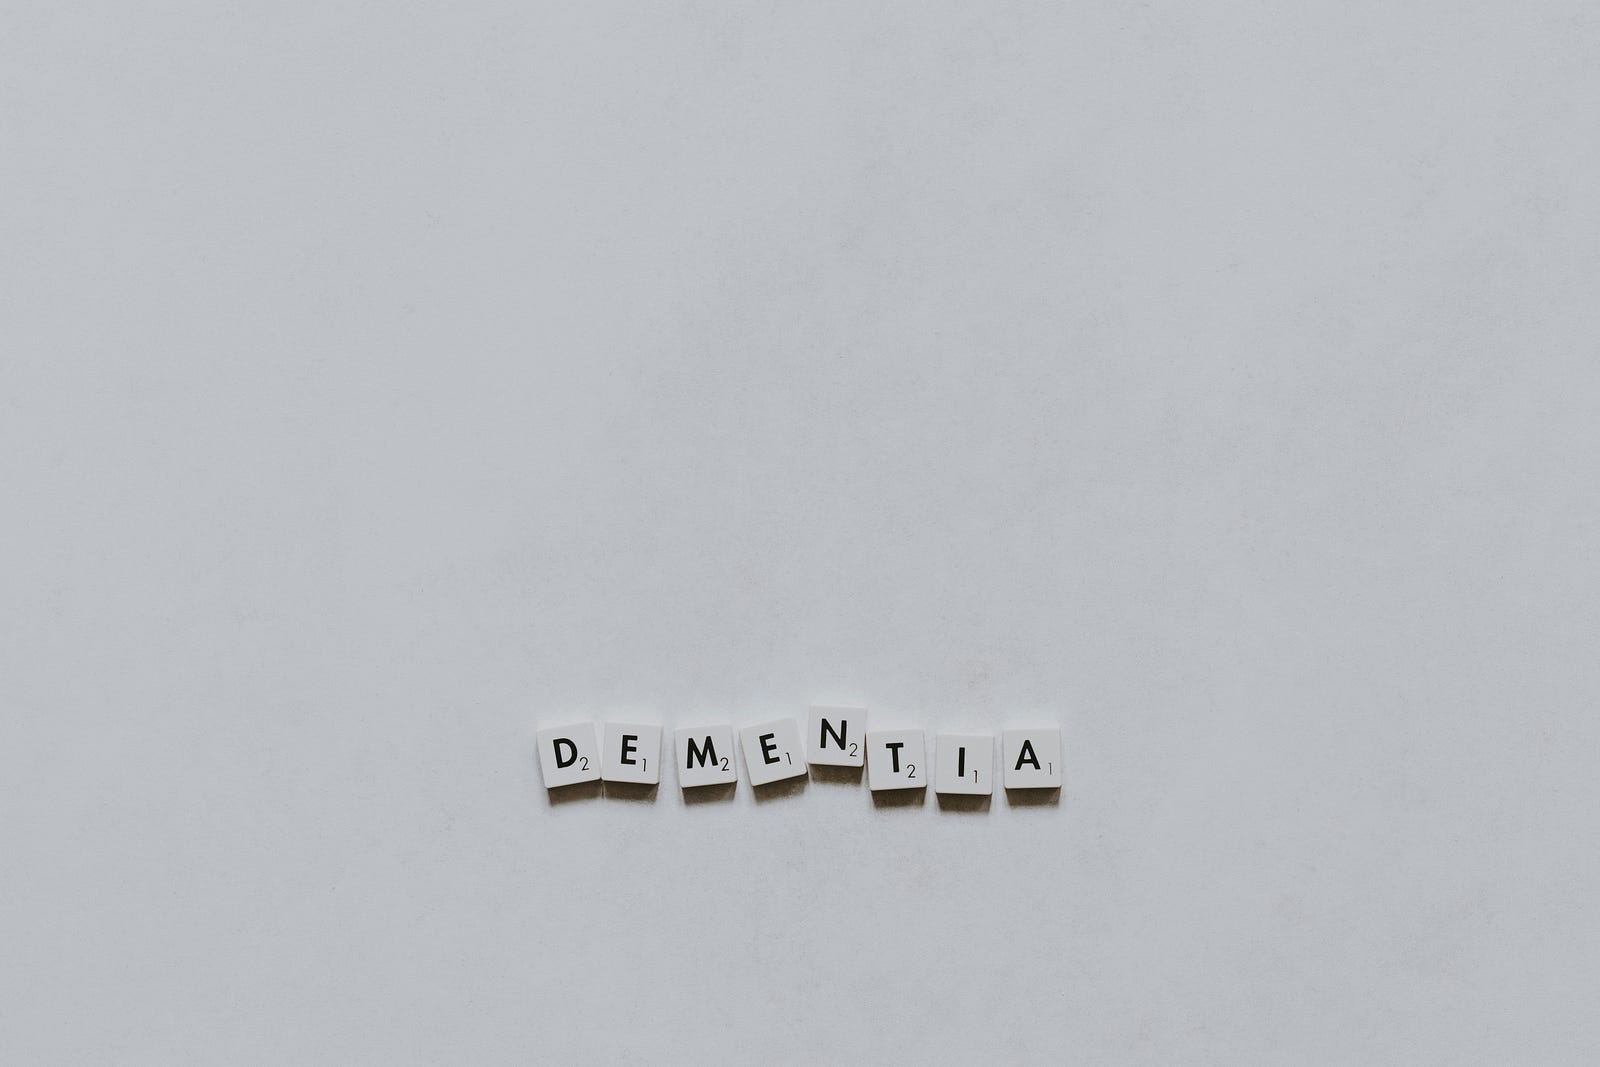 DEMENTIA, spelled out in Scrabble tiles.